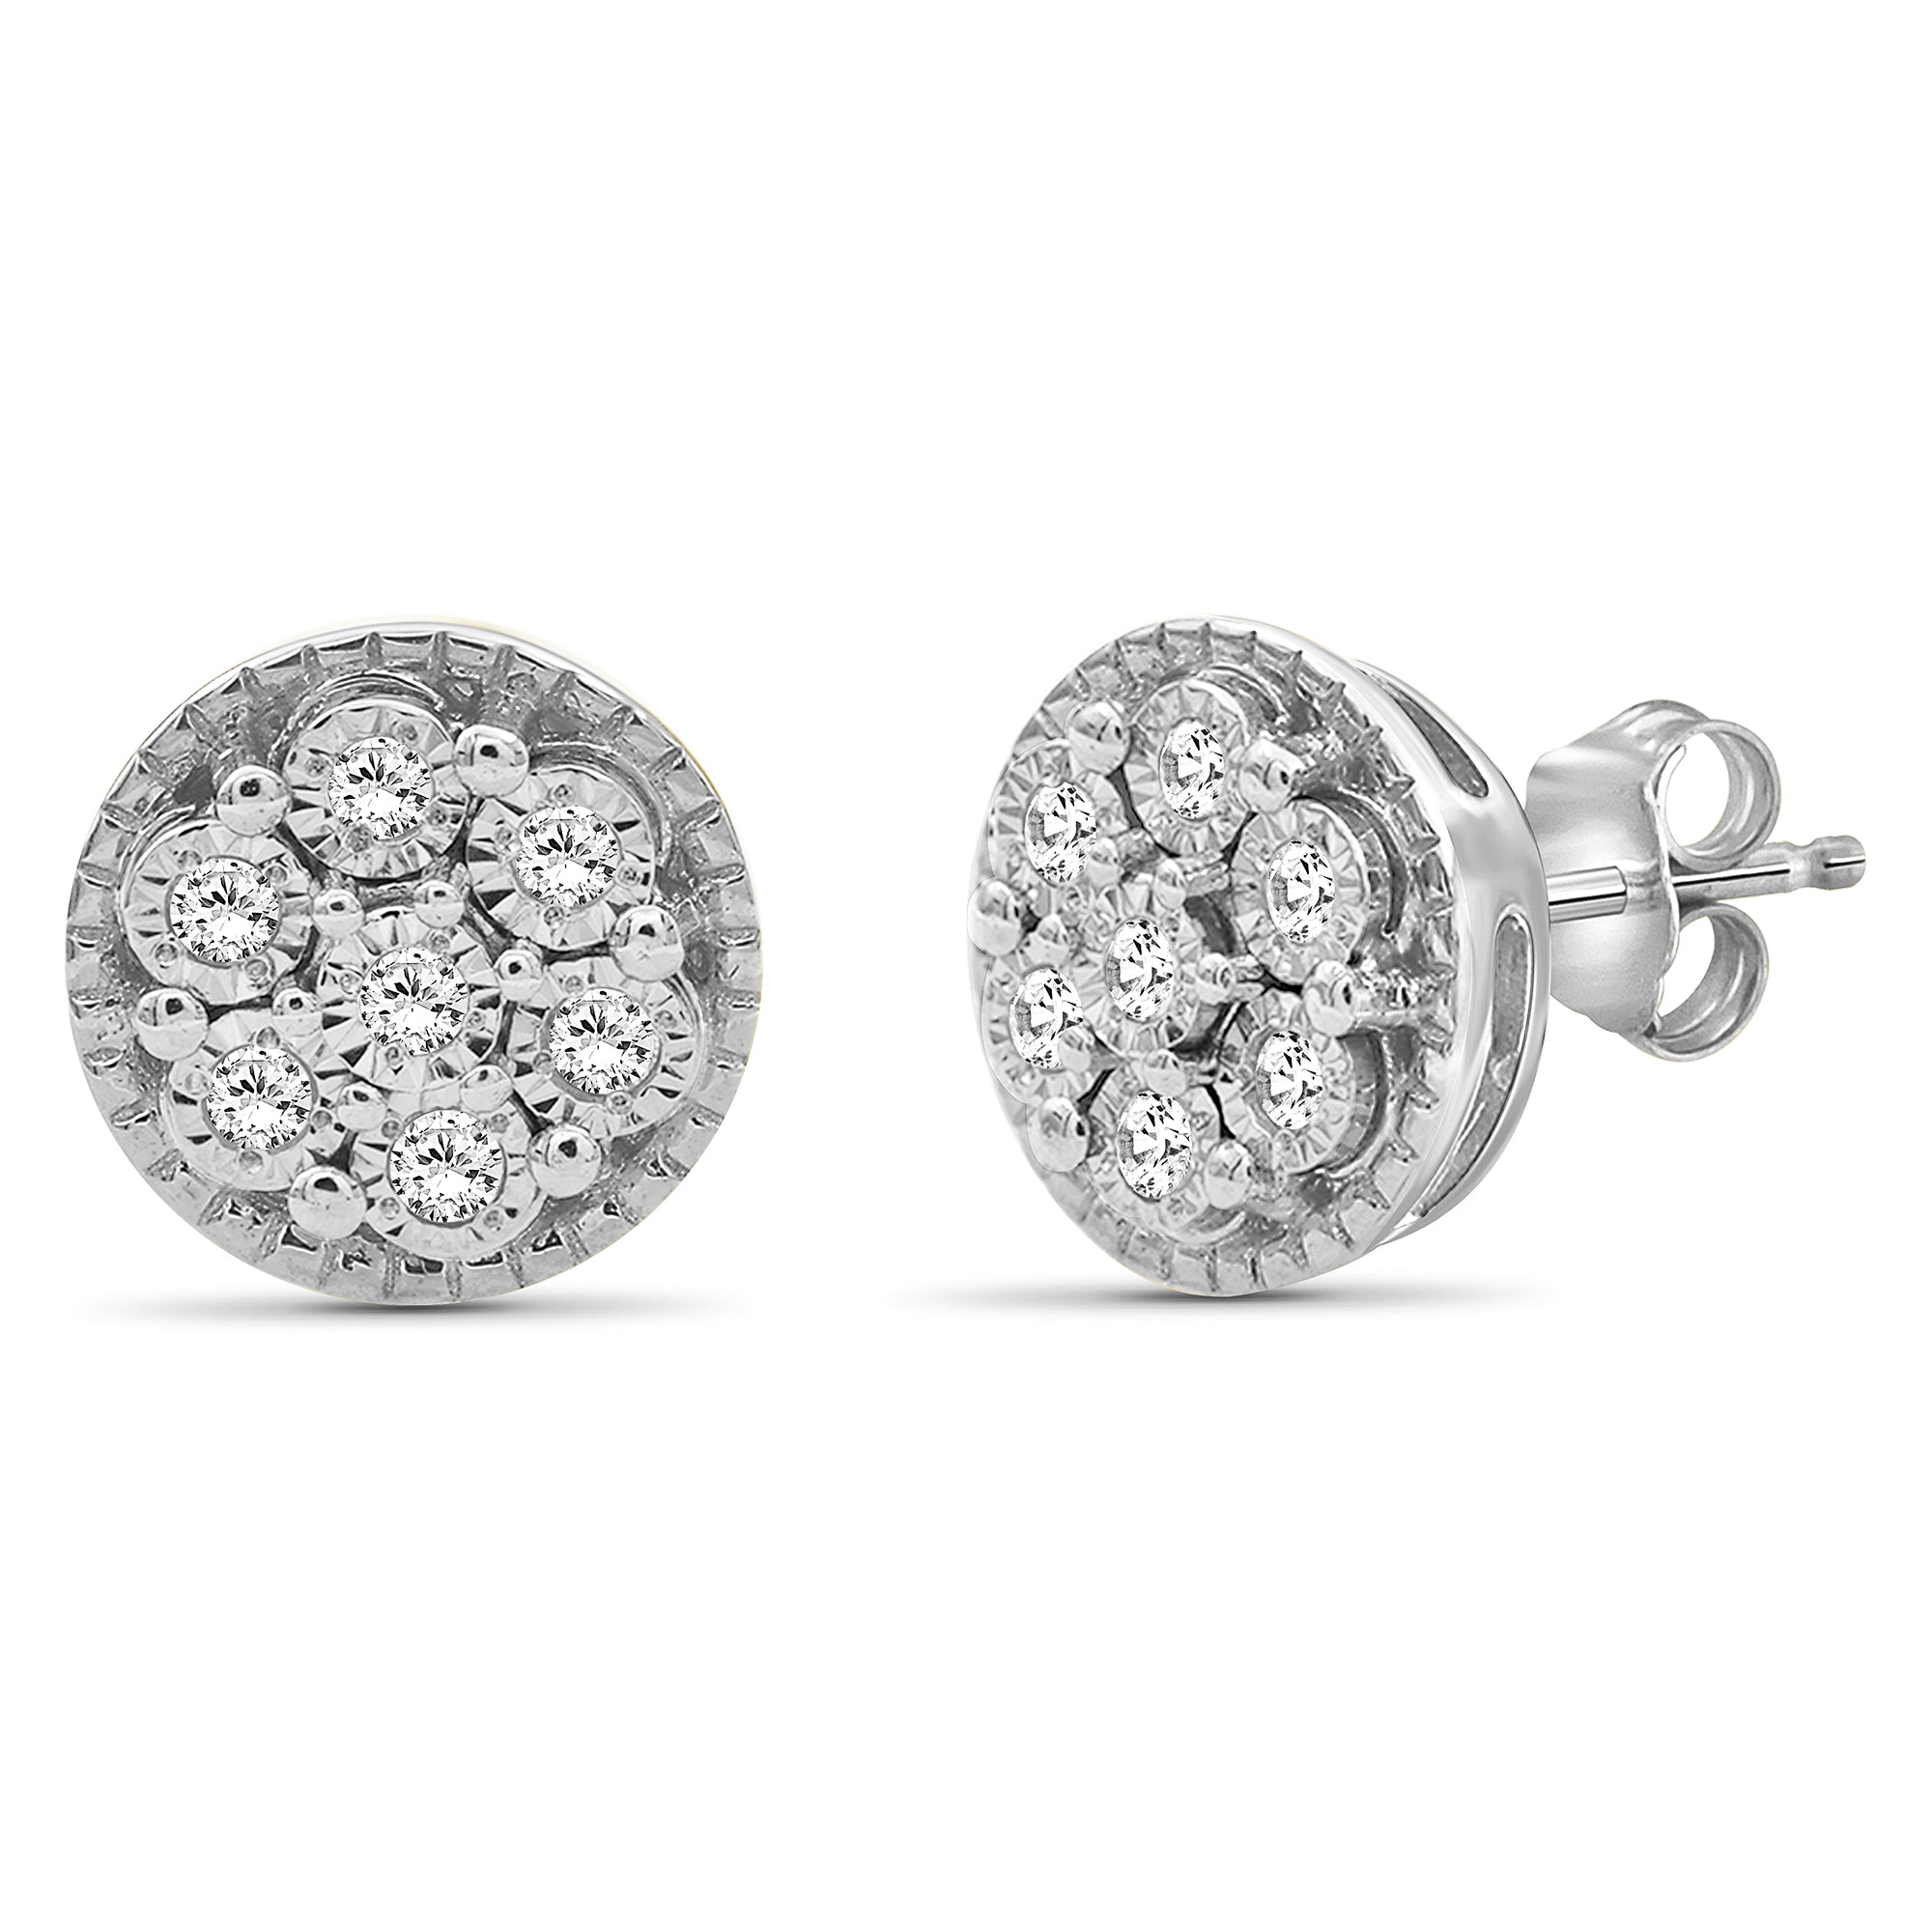 White Diamond Earrings for Women | 1/10 CTW White Diamond Cluster Earrings | Real Diamond Studs, Hypoallergenic Sterling Silver | Secure Push-Back Stud Earrings for Women